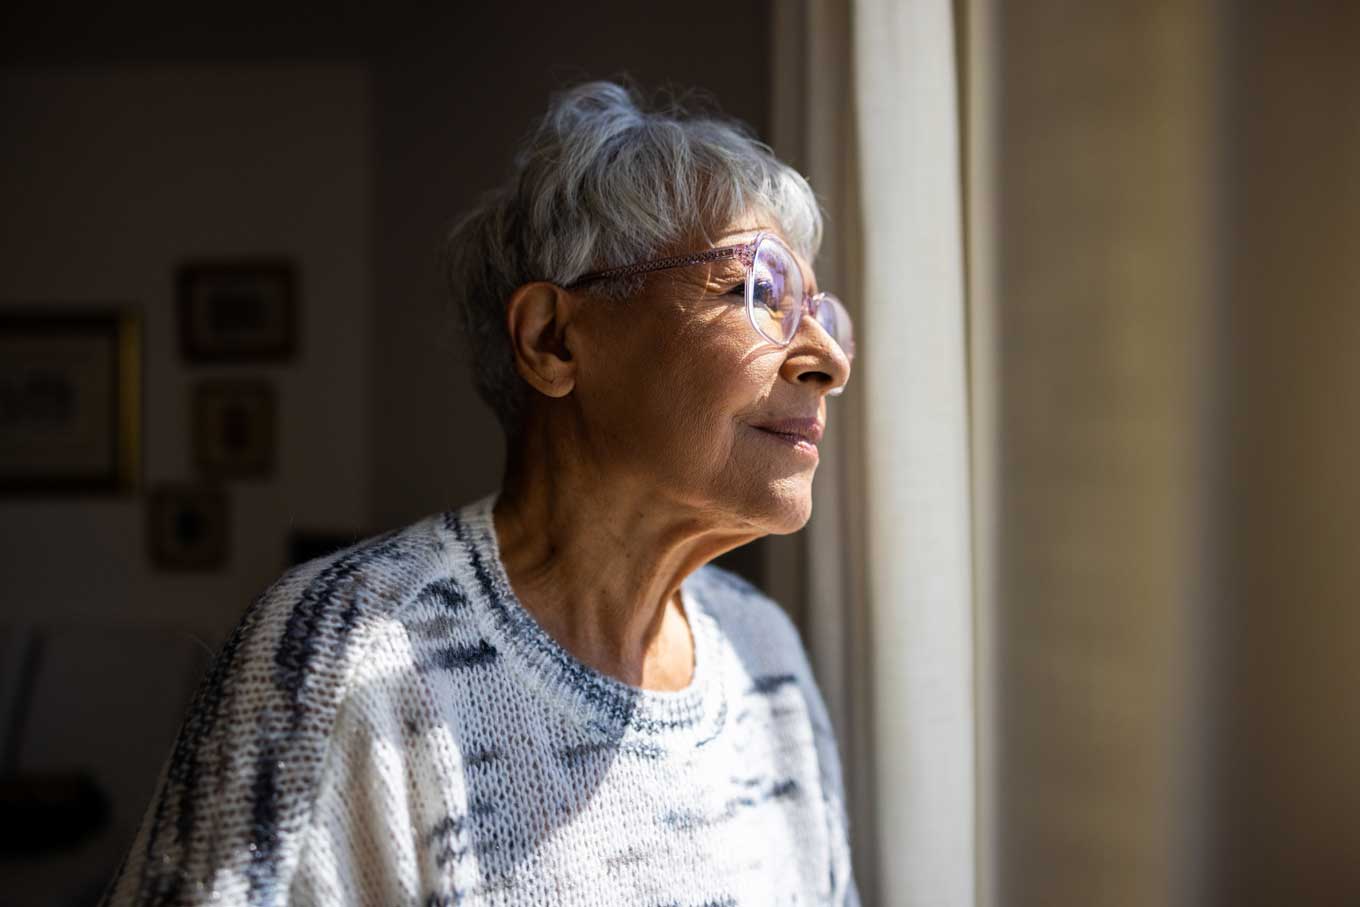 A senior woman smiles as she gazes outside a window.